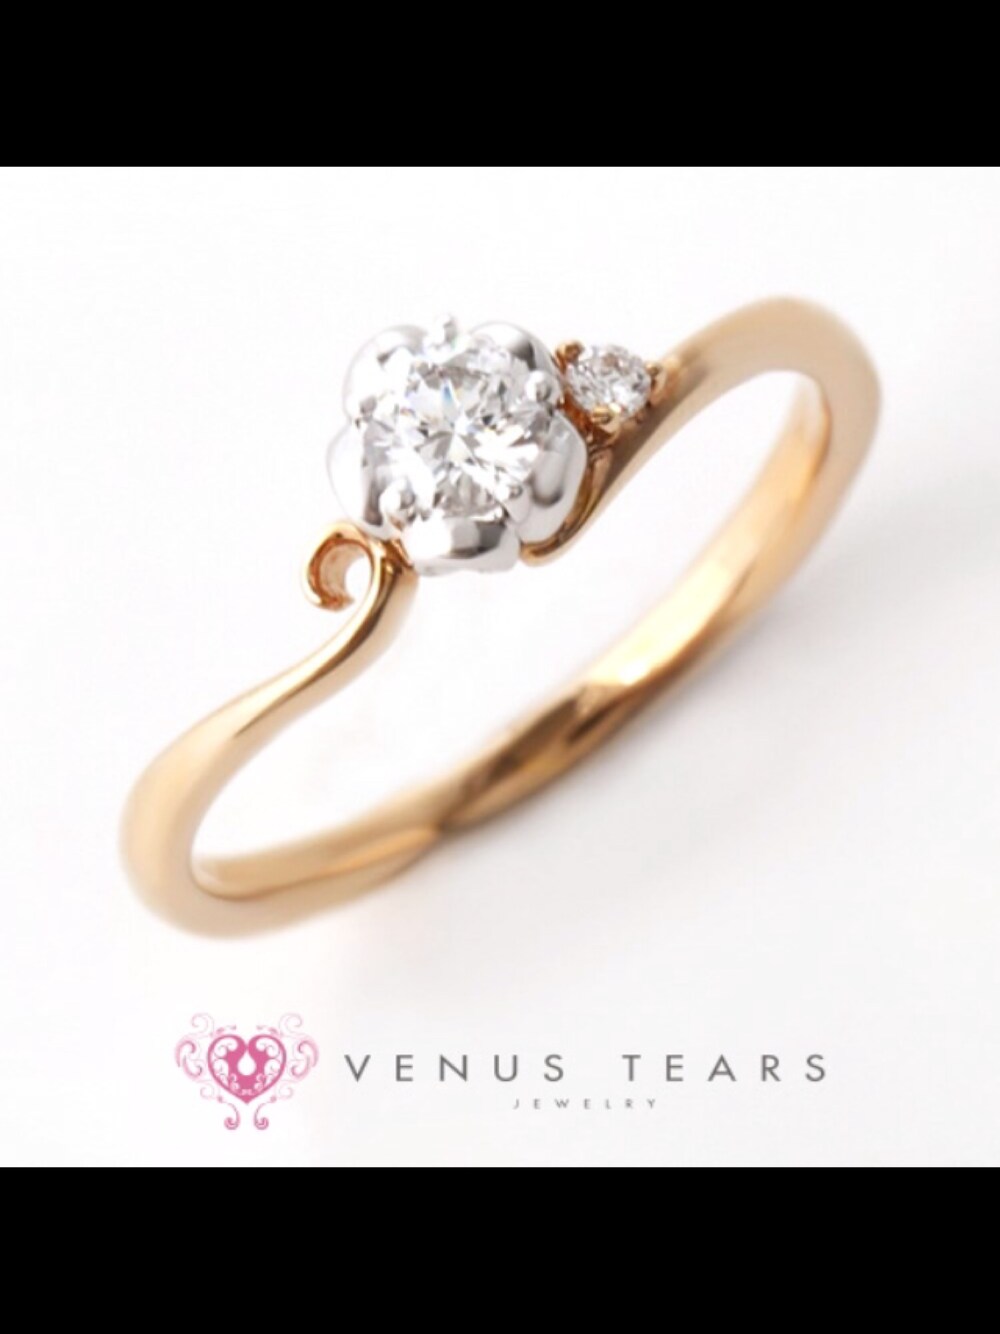 VENUS TEARS 銀座店│Venus tears的戒指搭配- WEAR